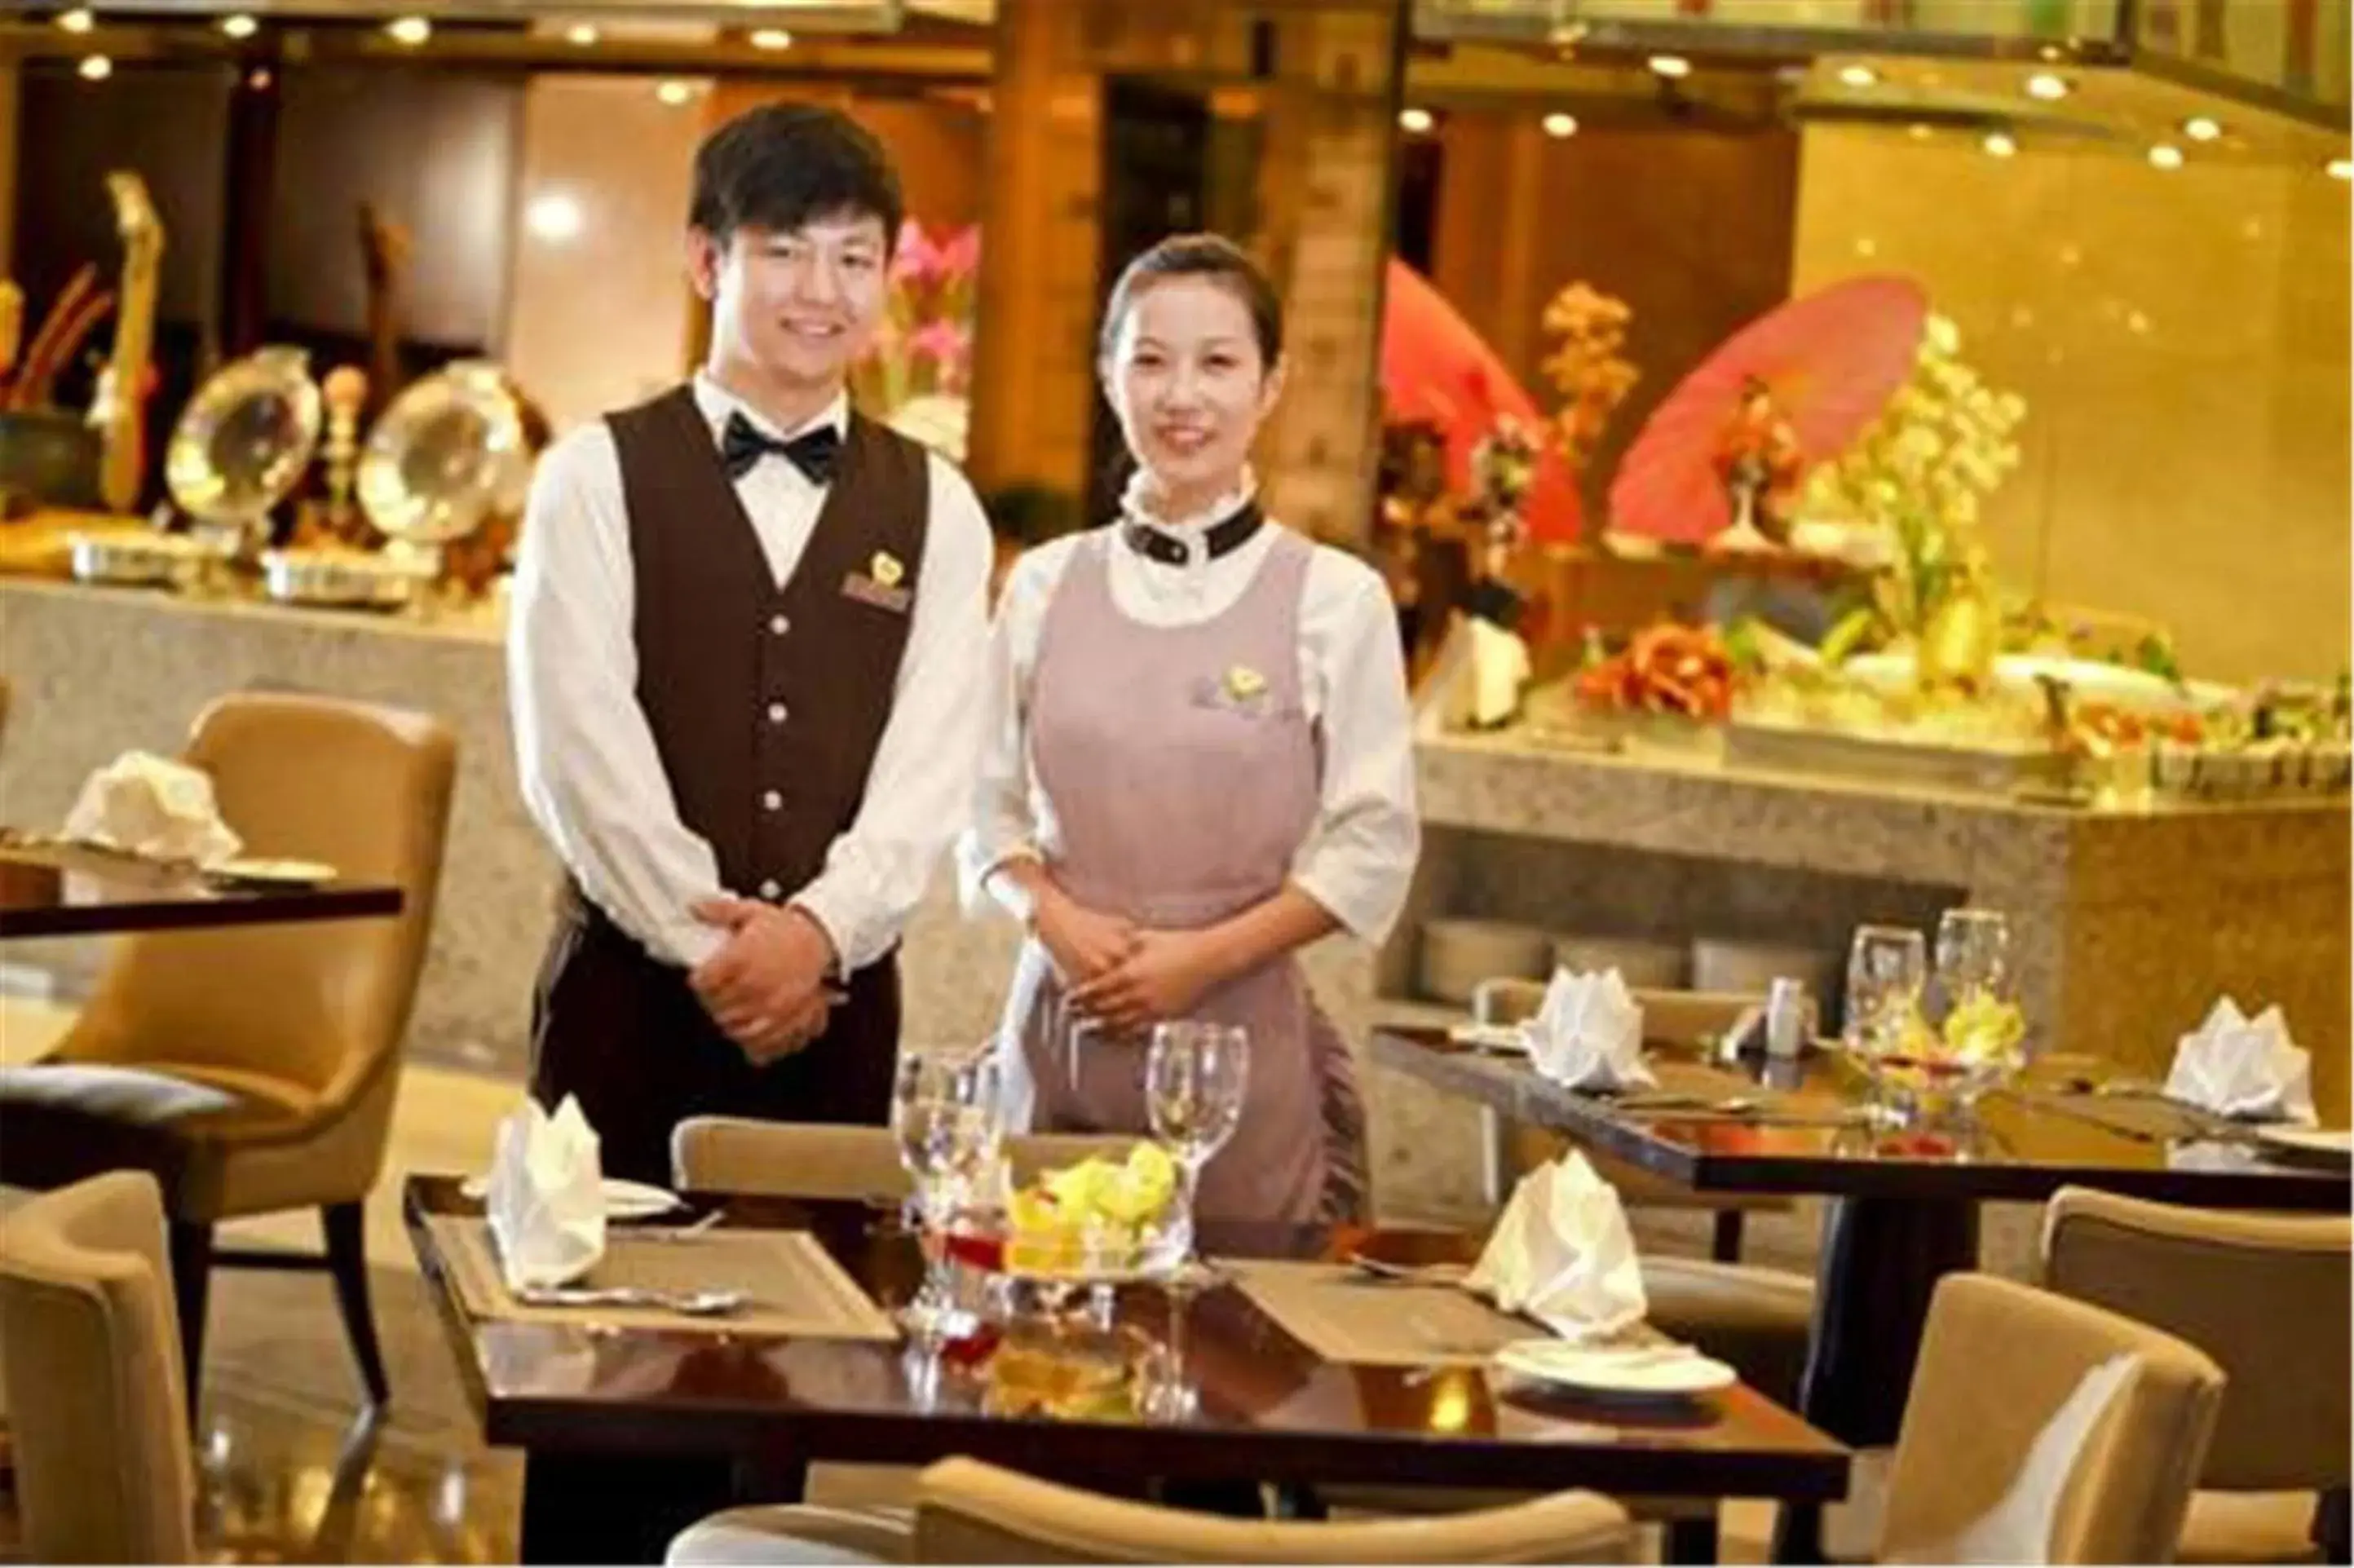 Staff in Royal International Hotel